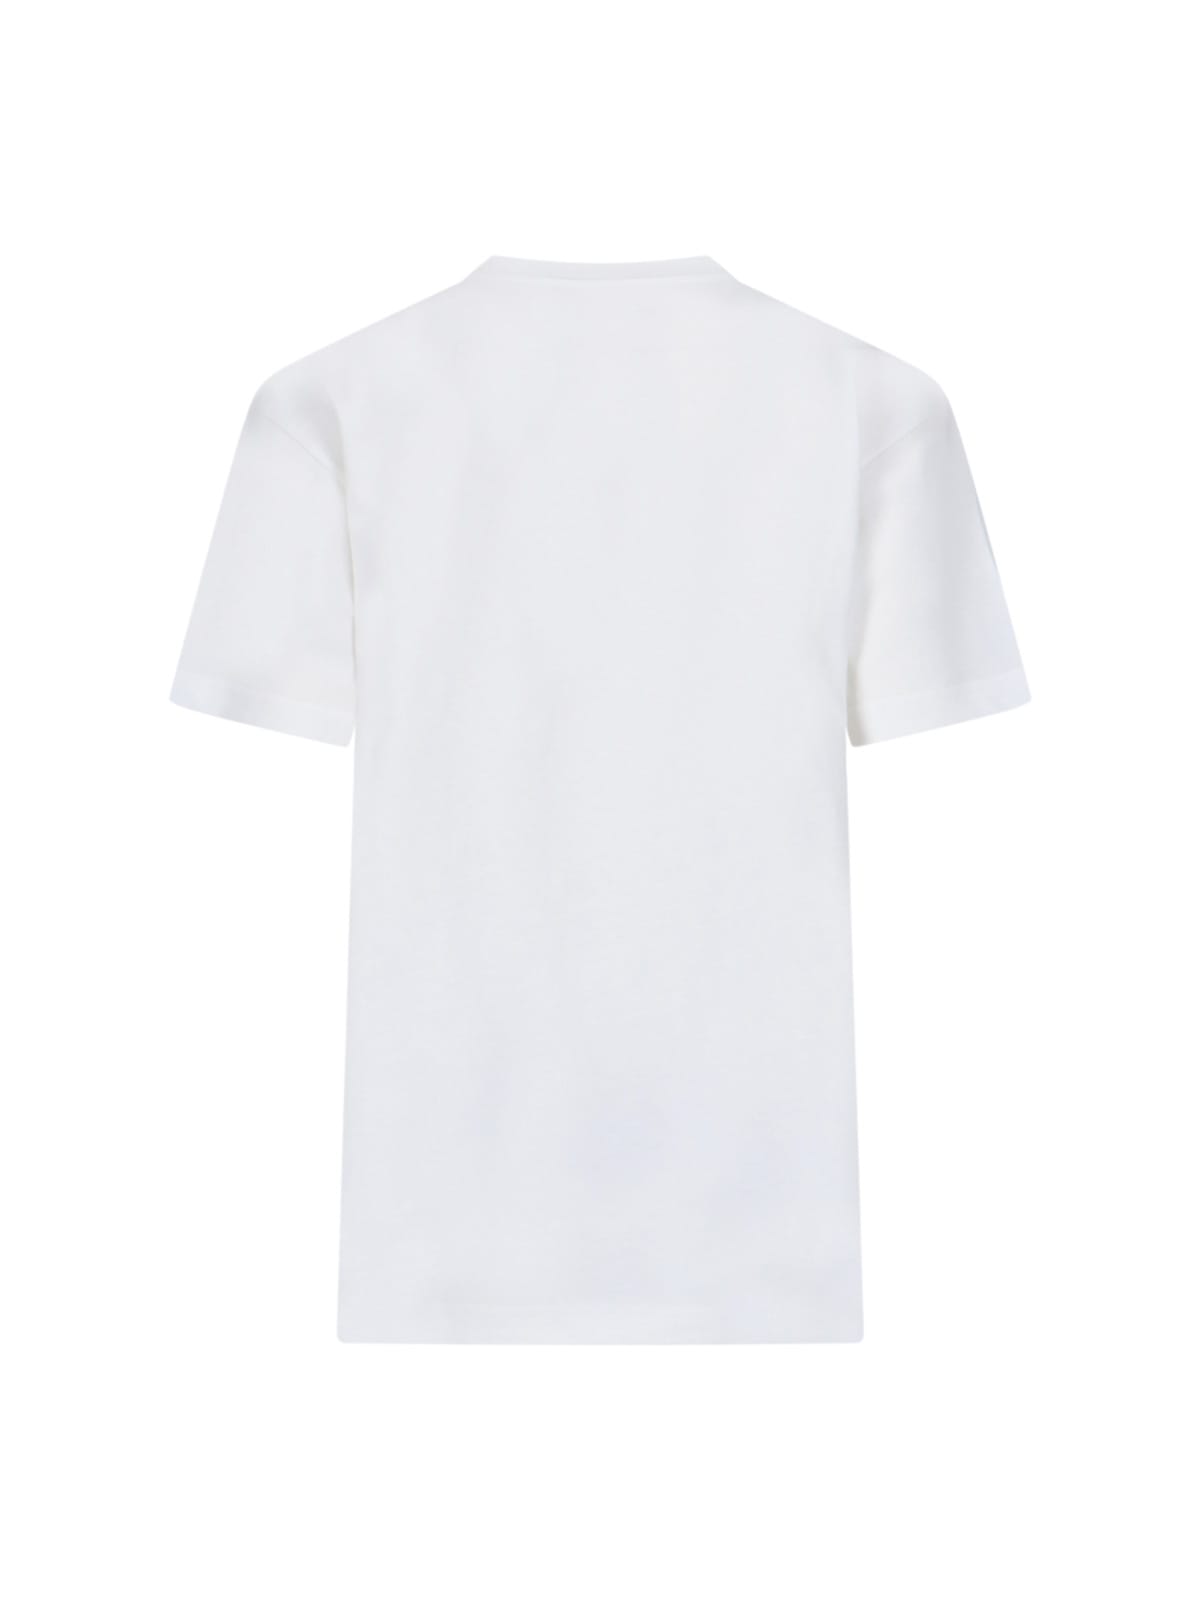 Shop Alaïa Logo T-shirt In White